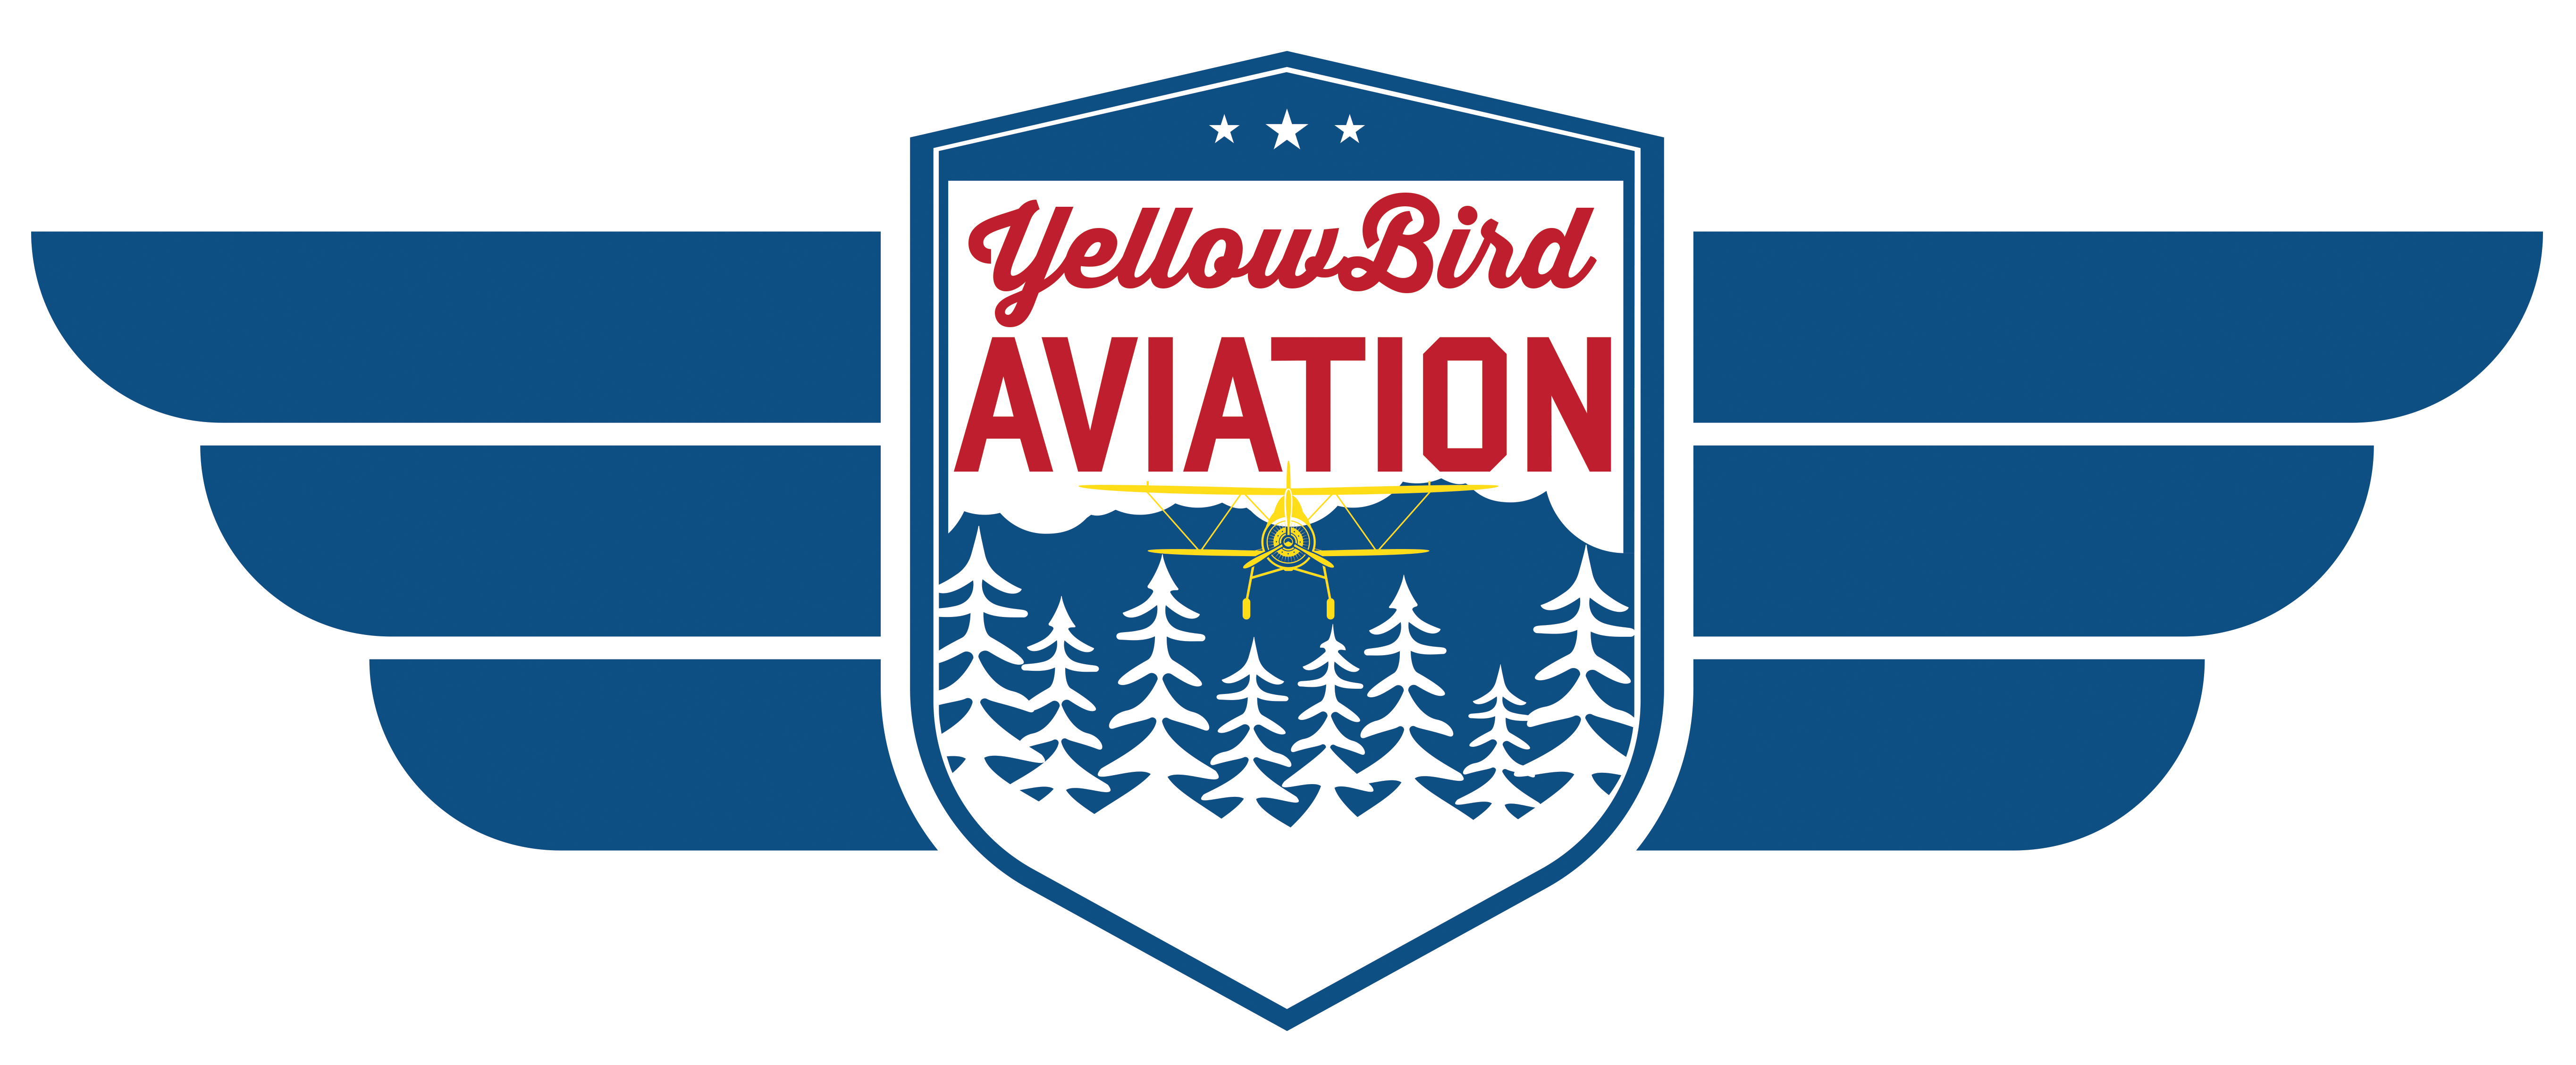 Yellowbird Aviation